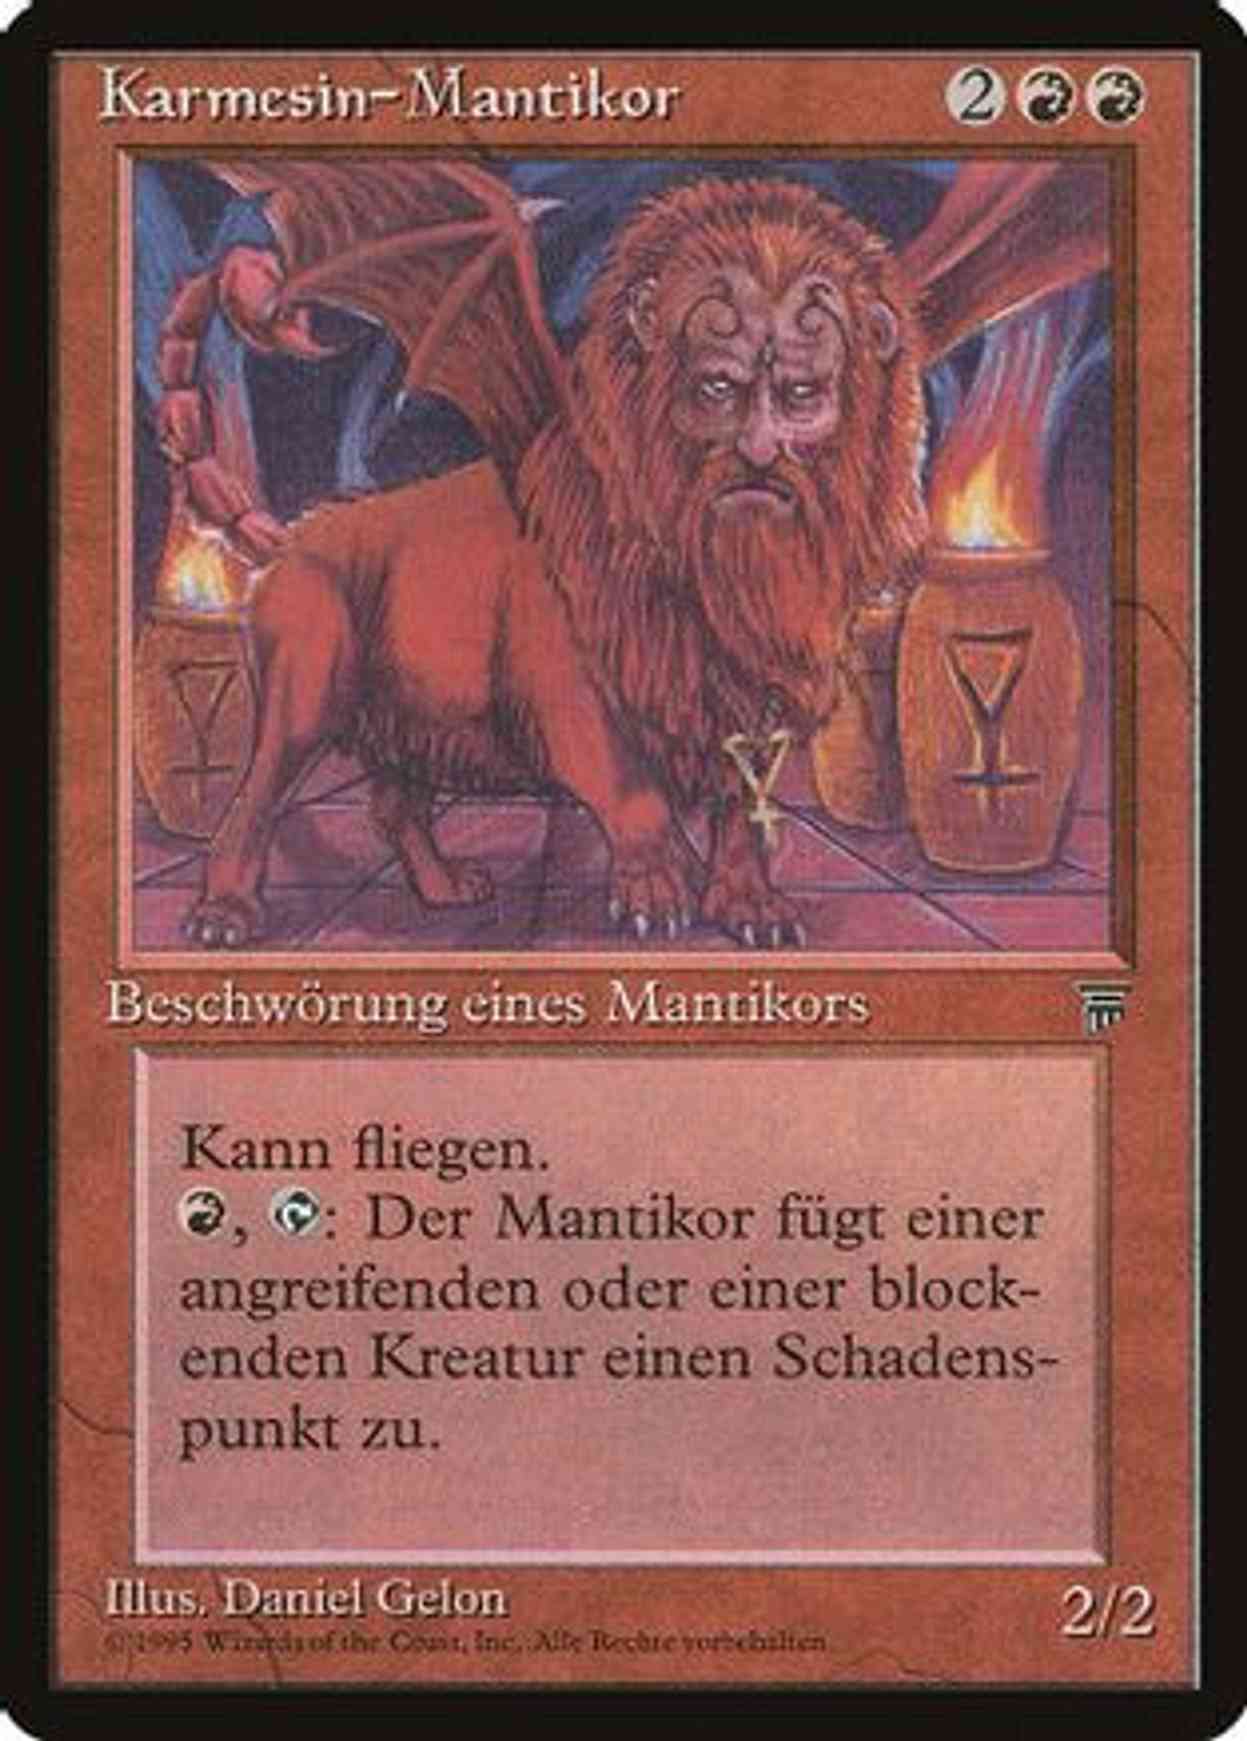 Crimson Manticore (German) - "Karmesin-Mantikor" magic card front